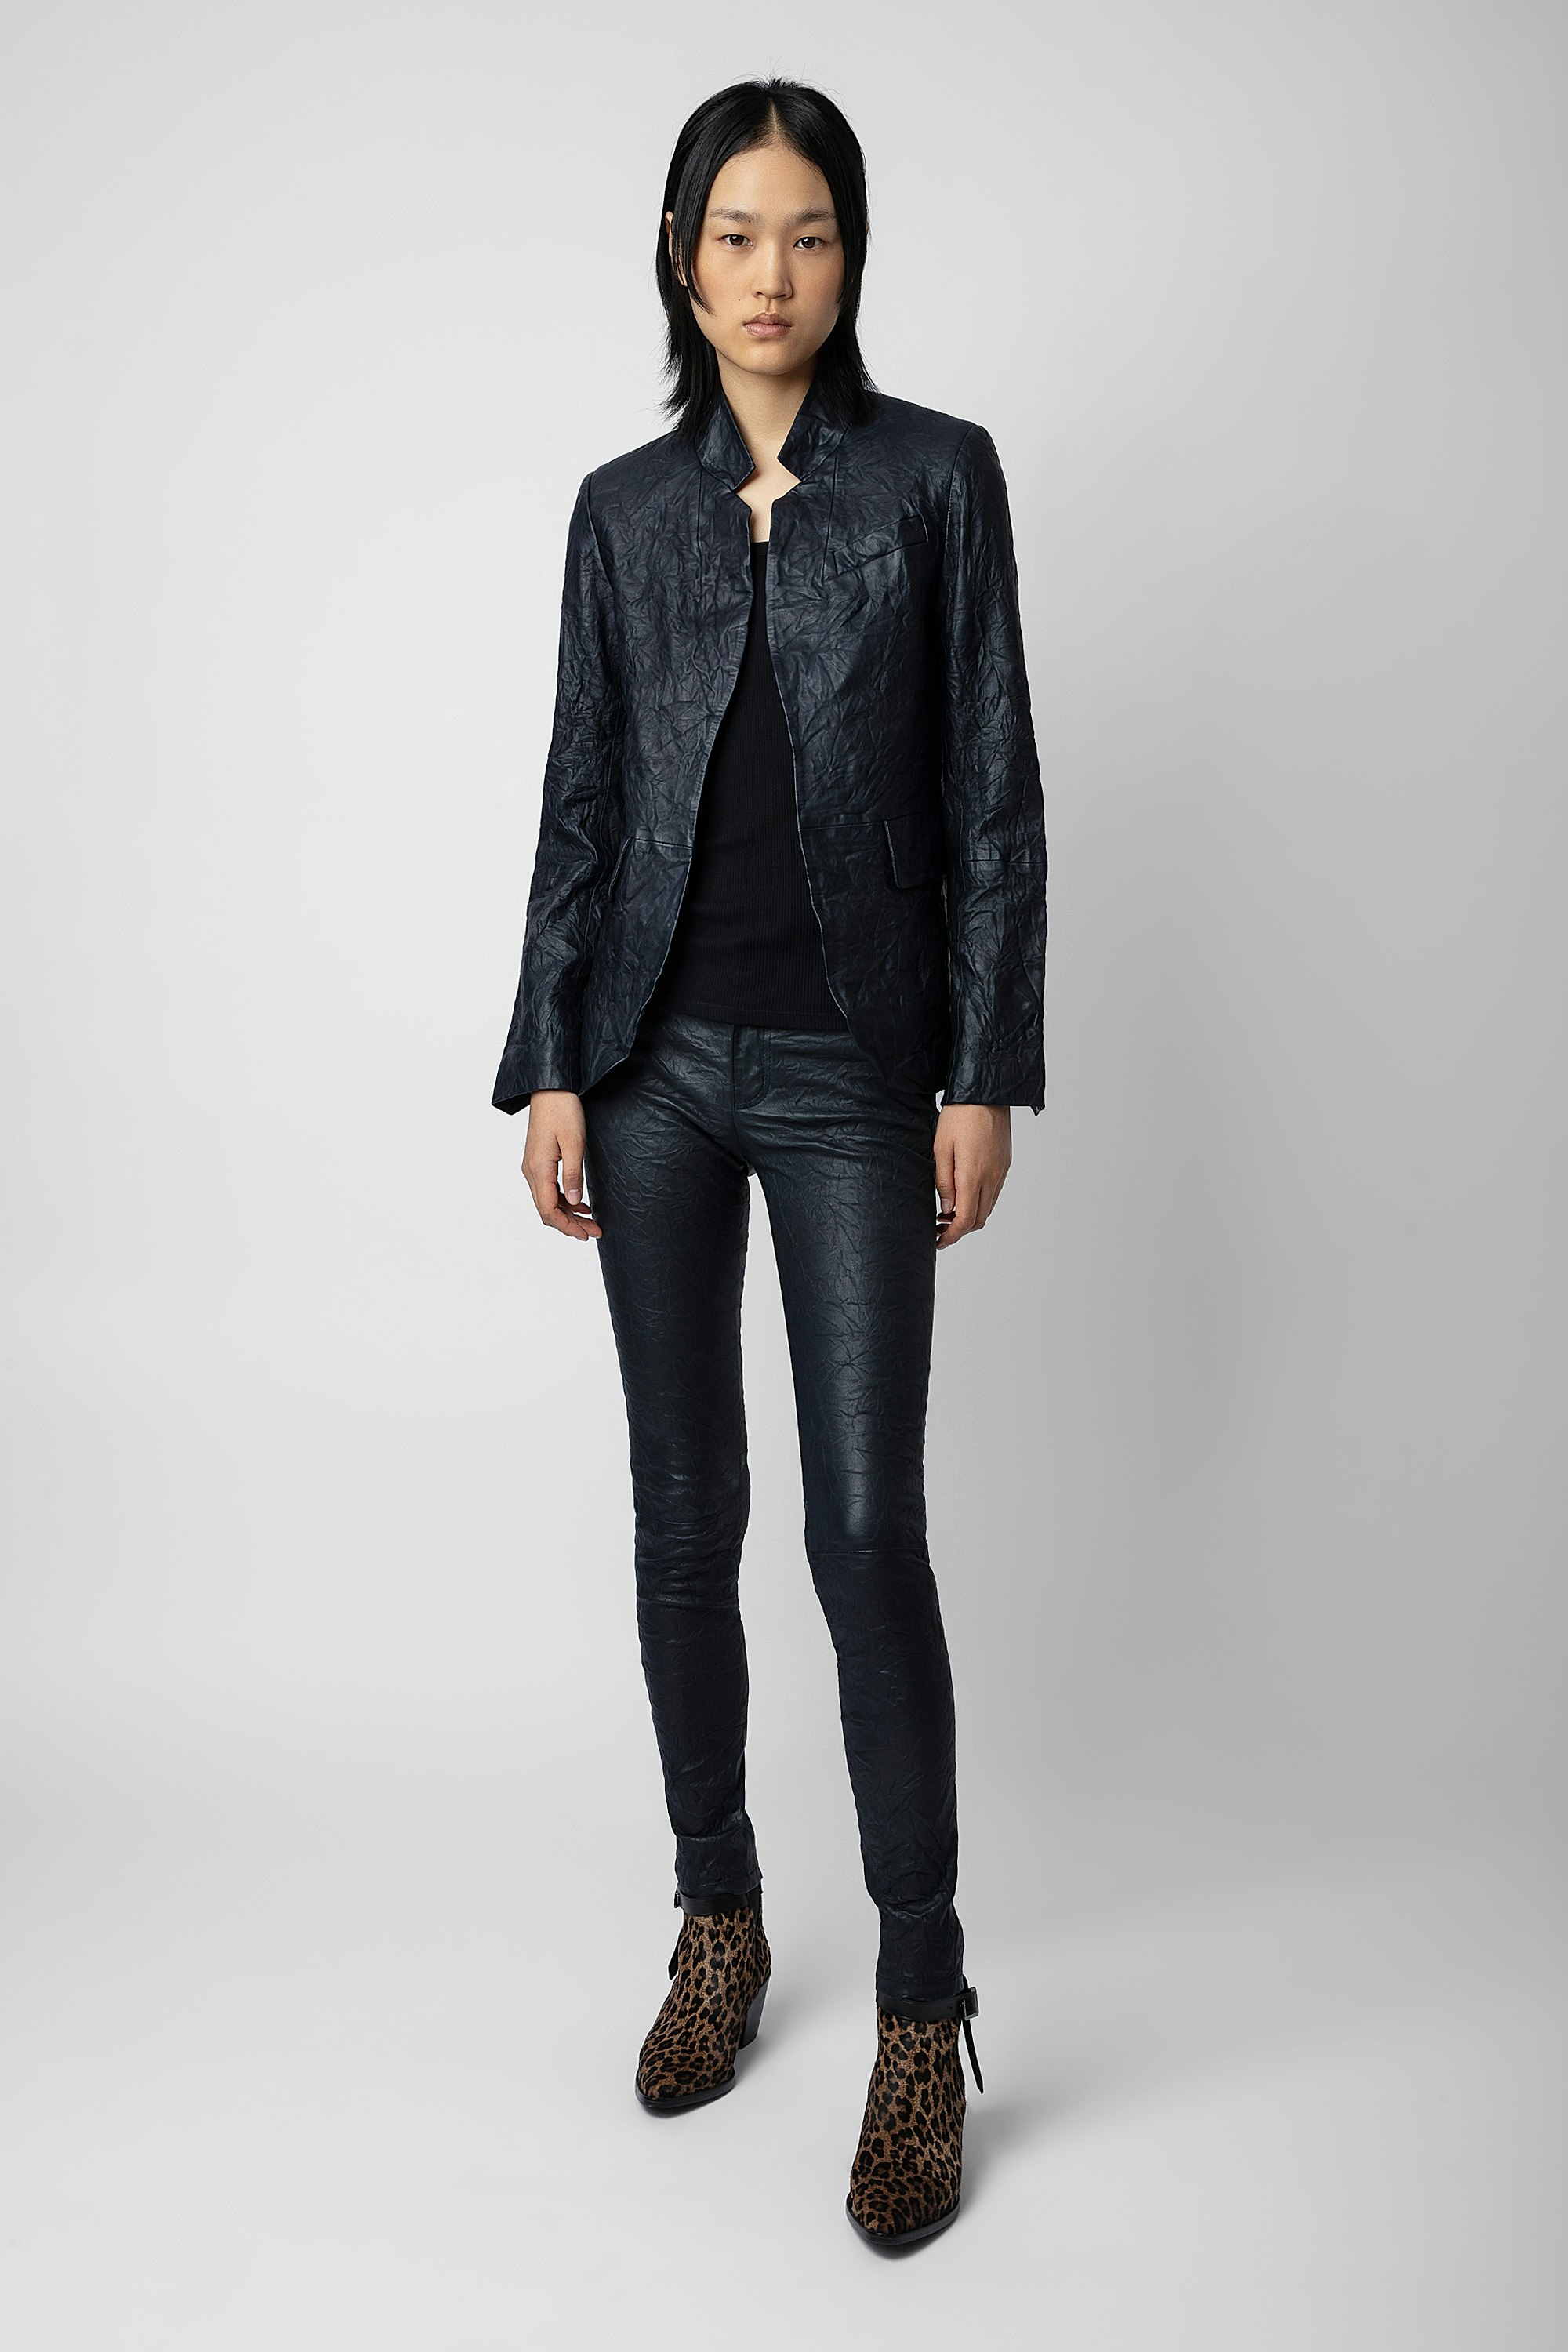 Very Creased Leather Blazer - Women’s navy blue creased leather blazer.